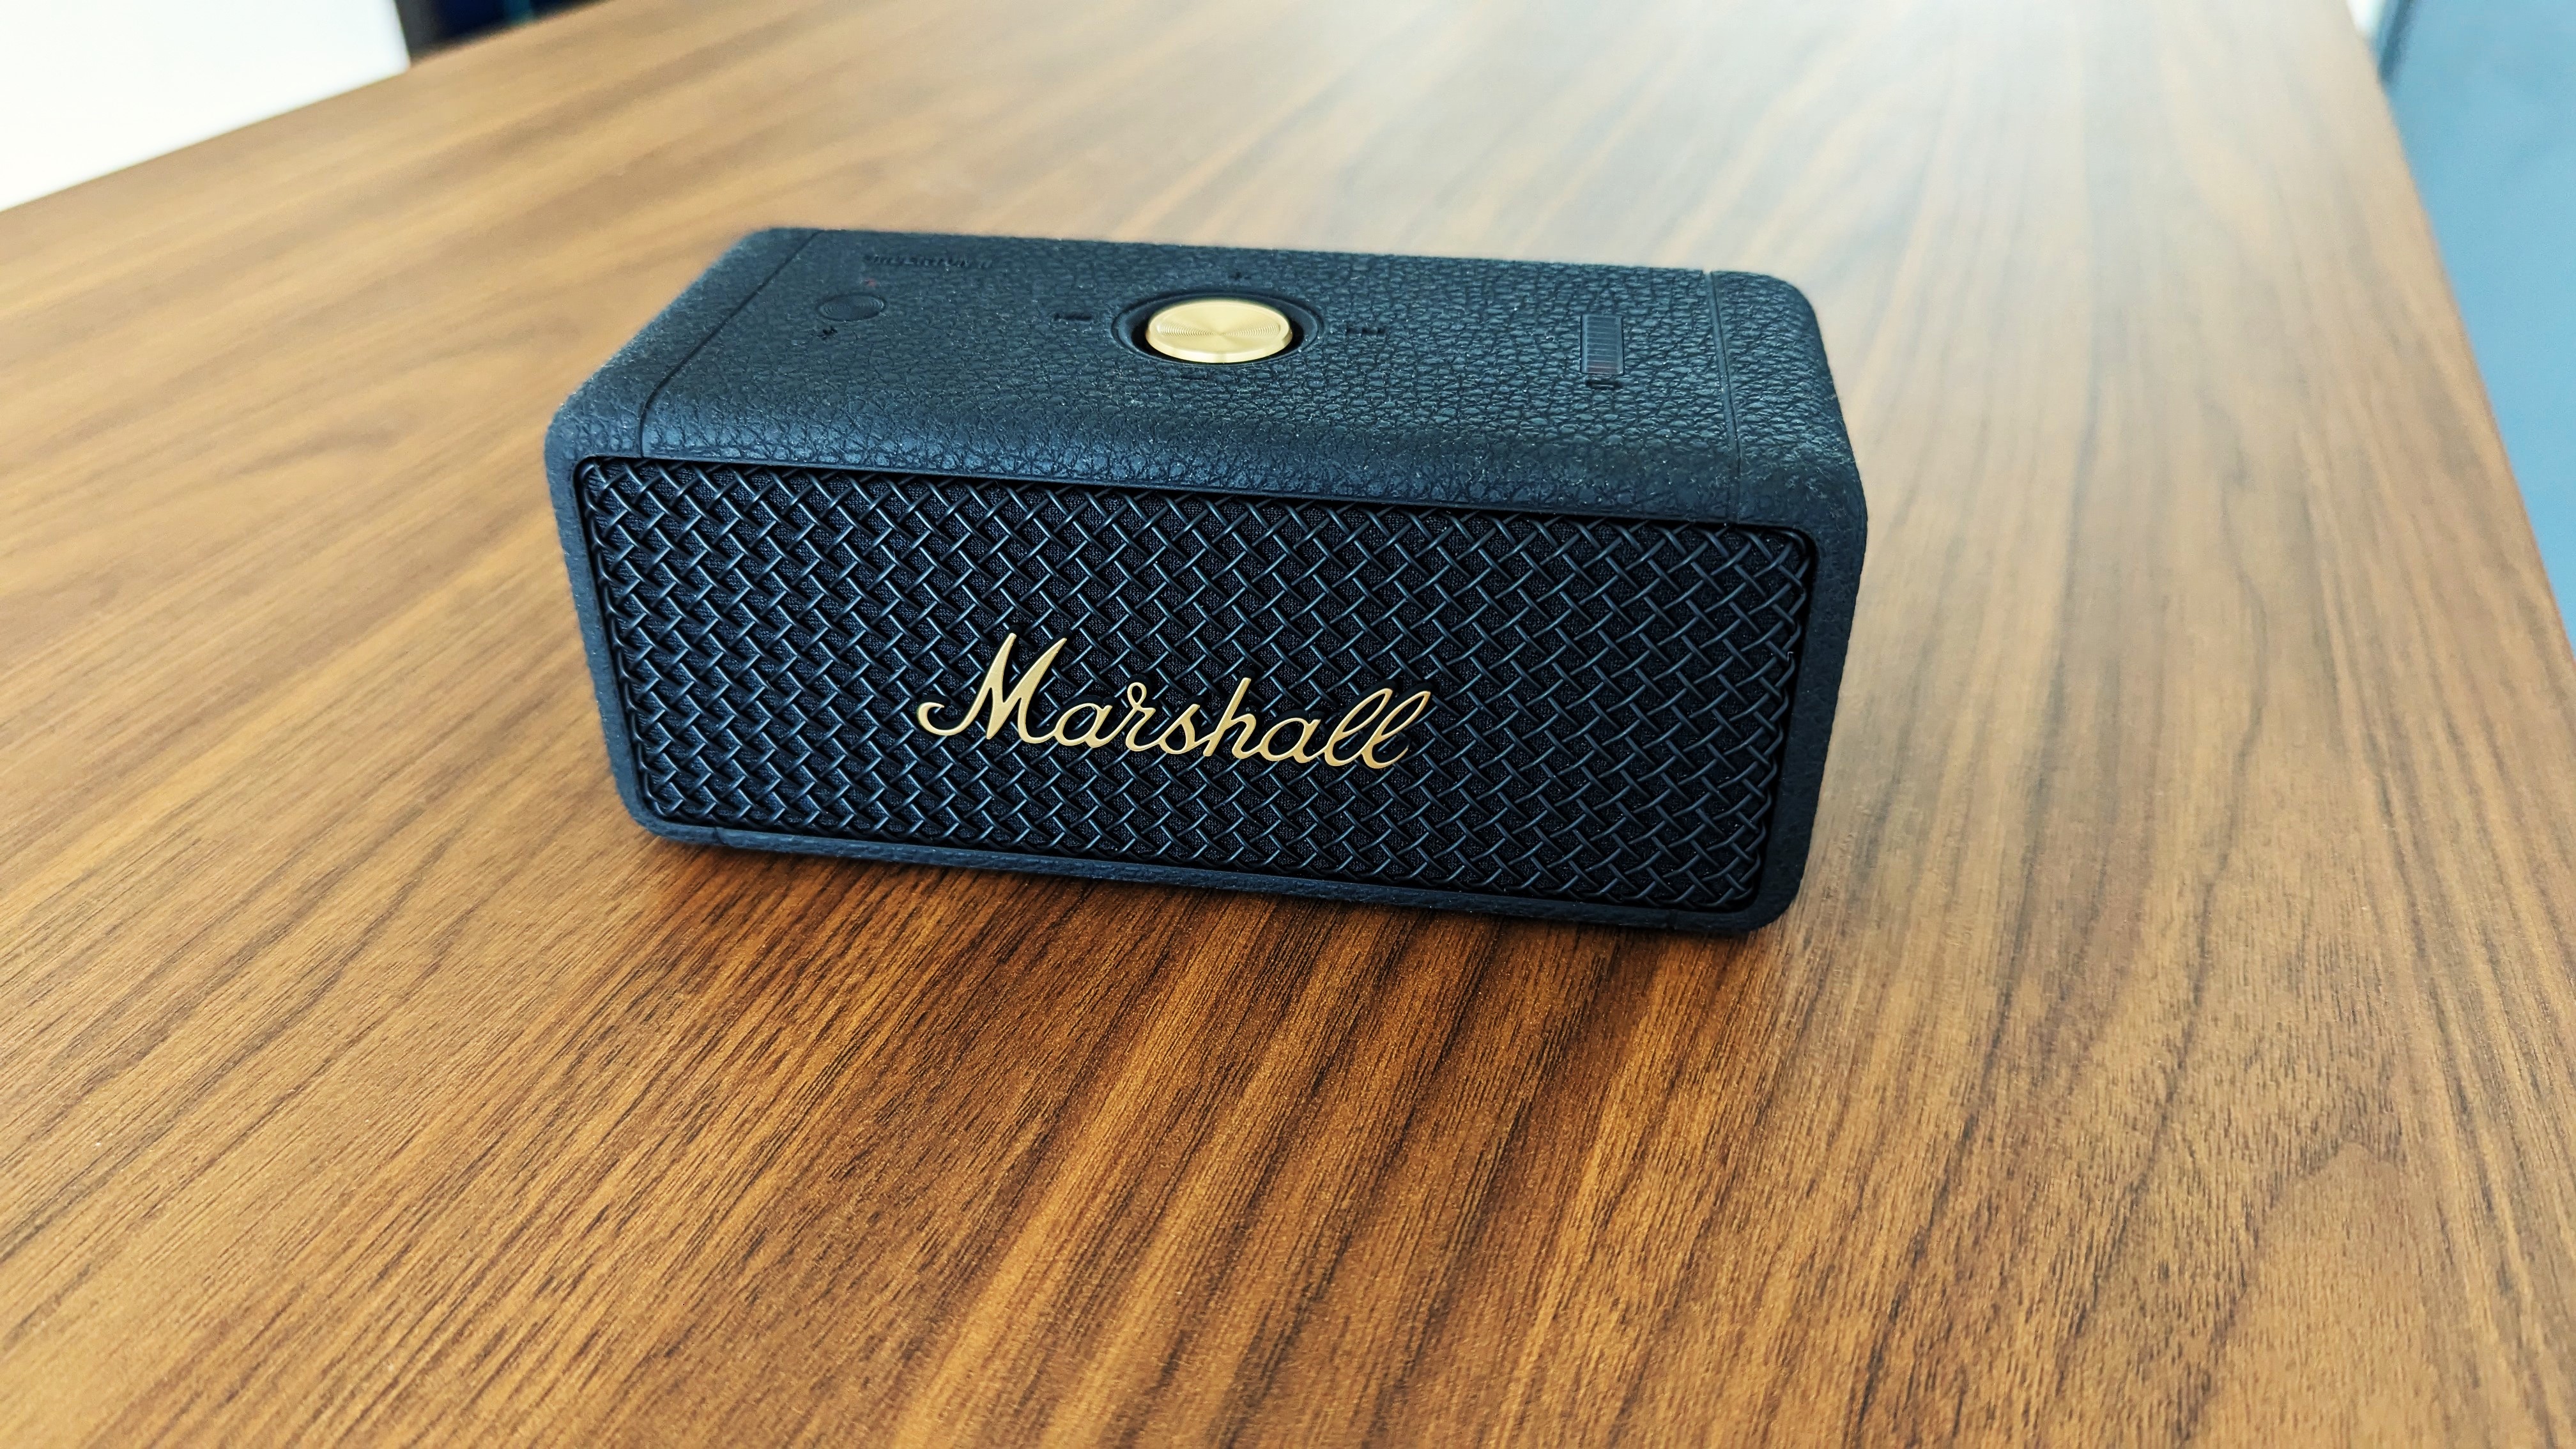 How to - Emberton II - Pair Bluetooth – Marshall